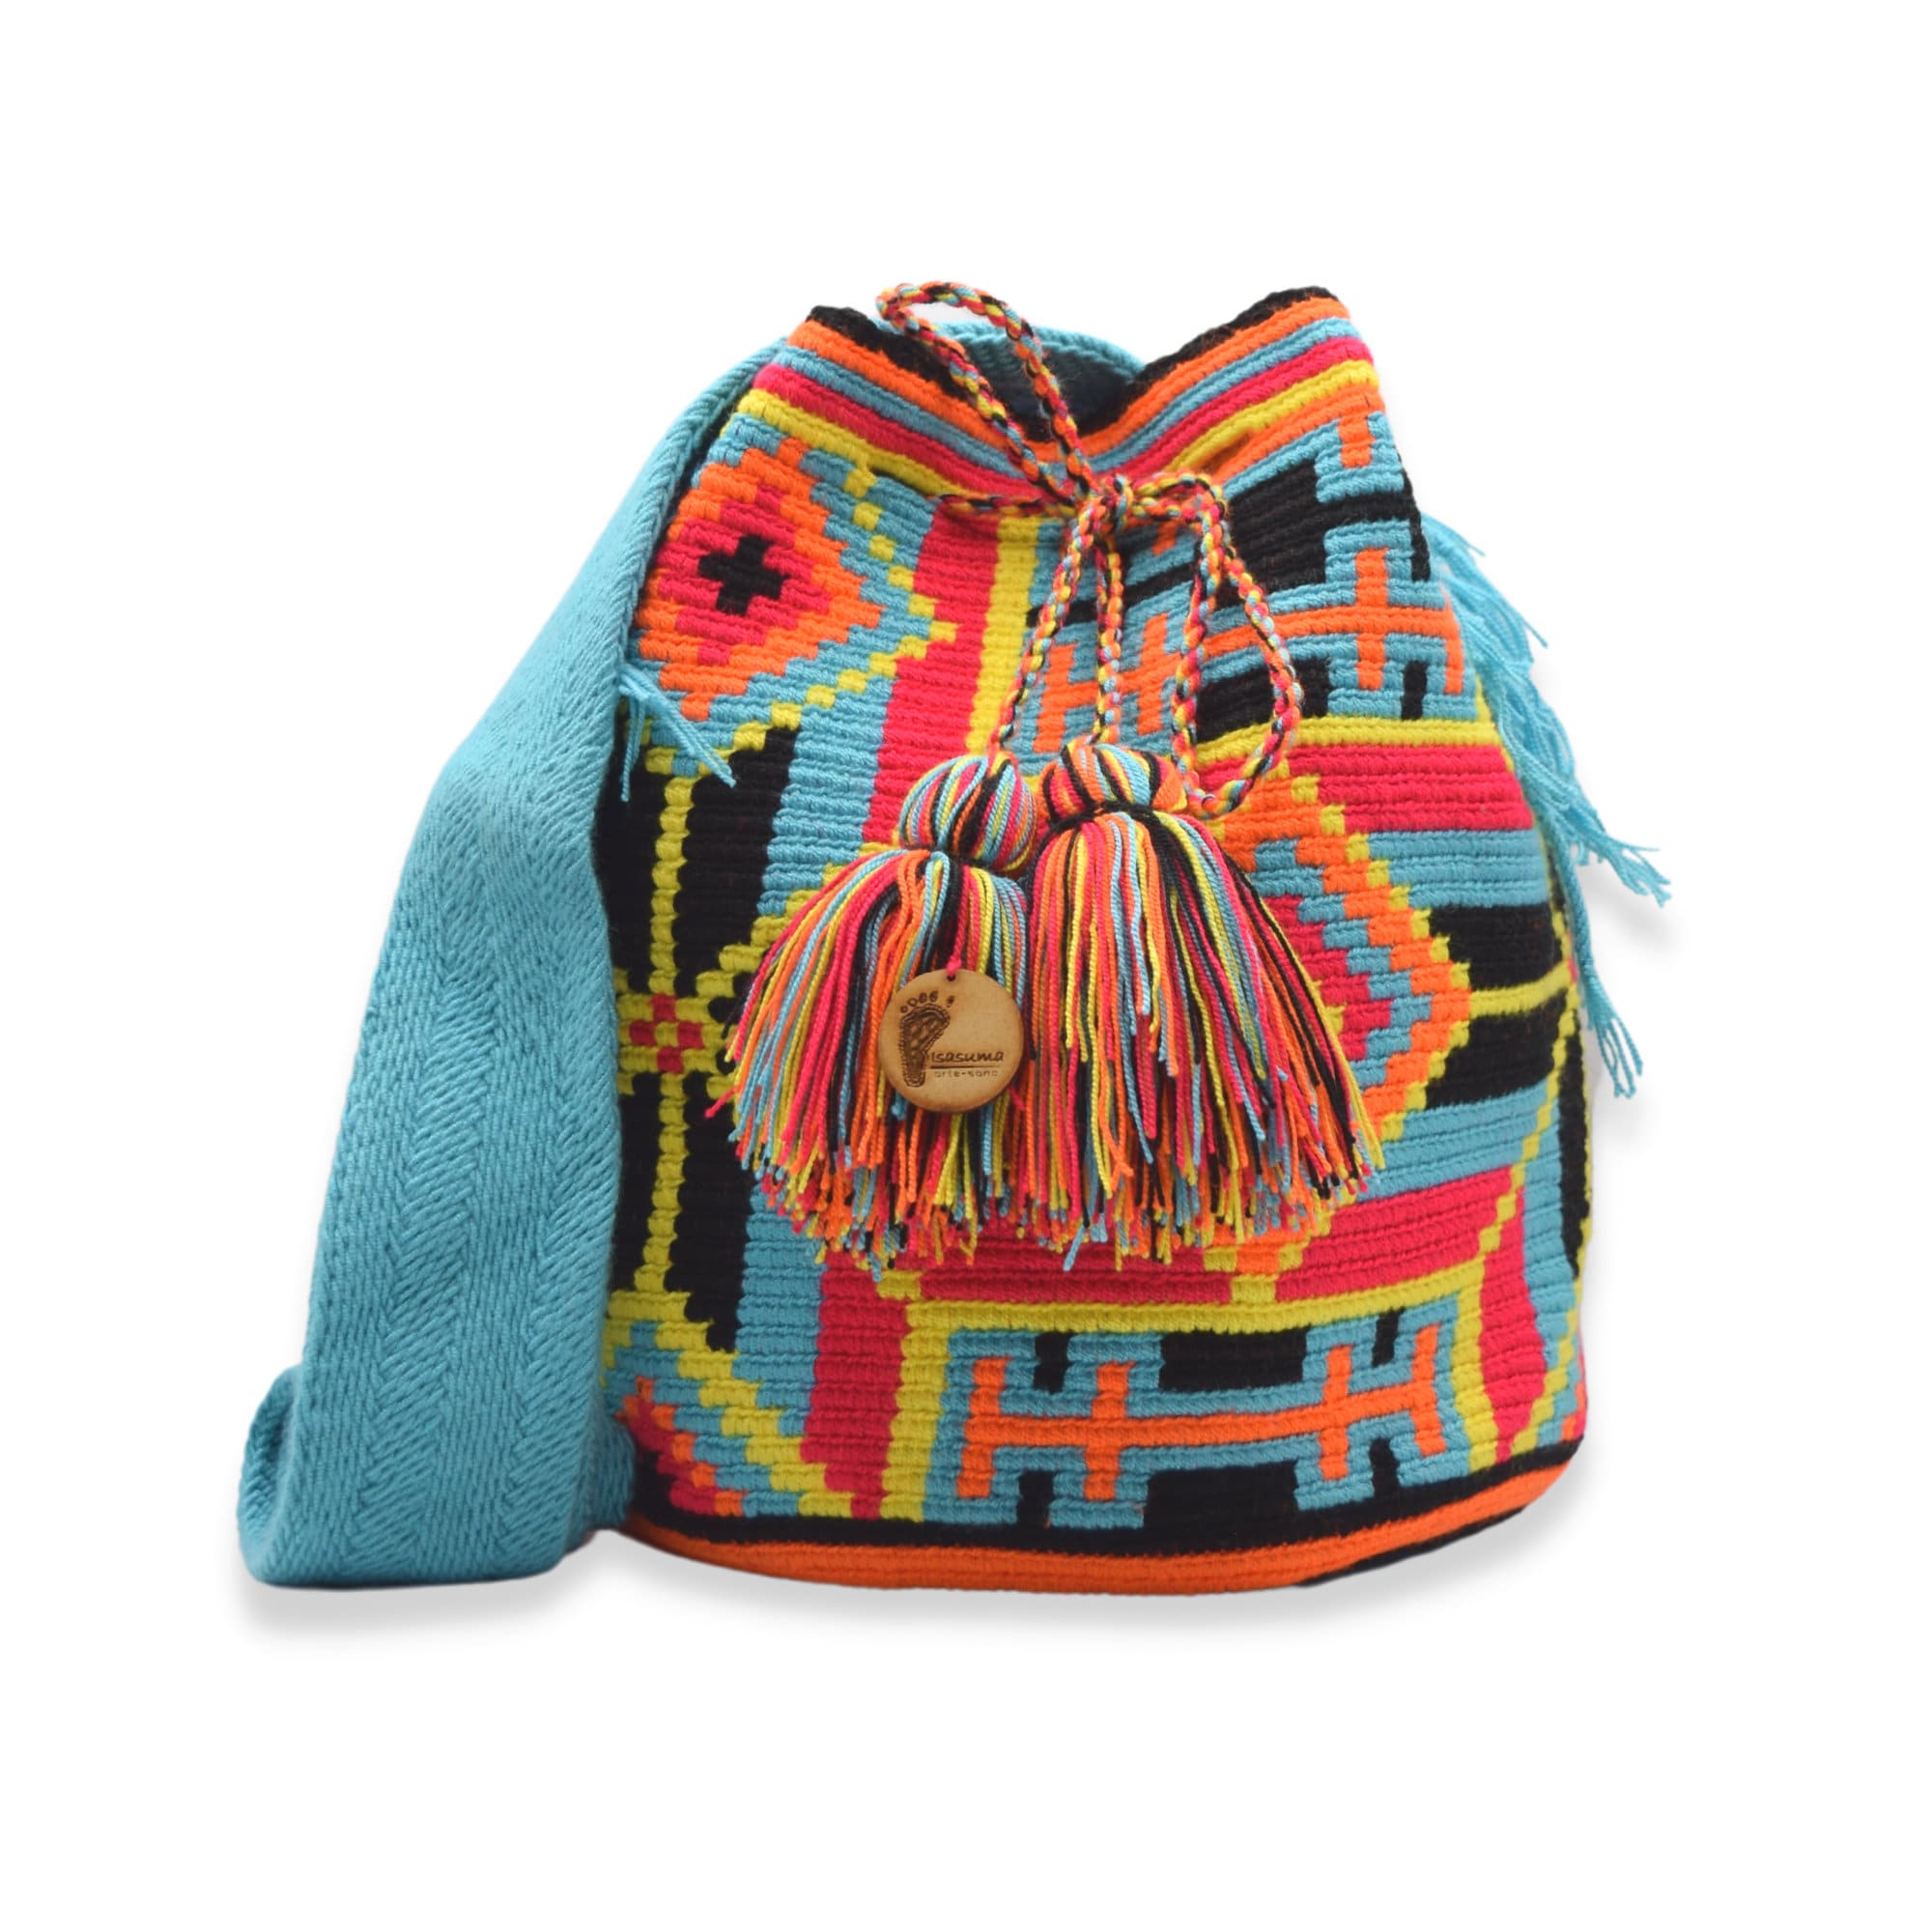 Wayuu mochila bag | Large Tradicional | Blue and black, orange neon